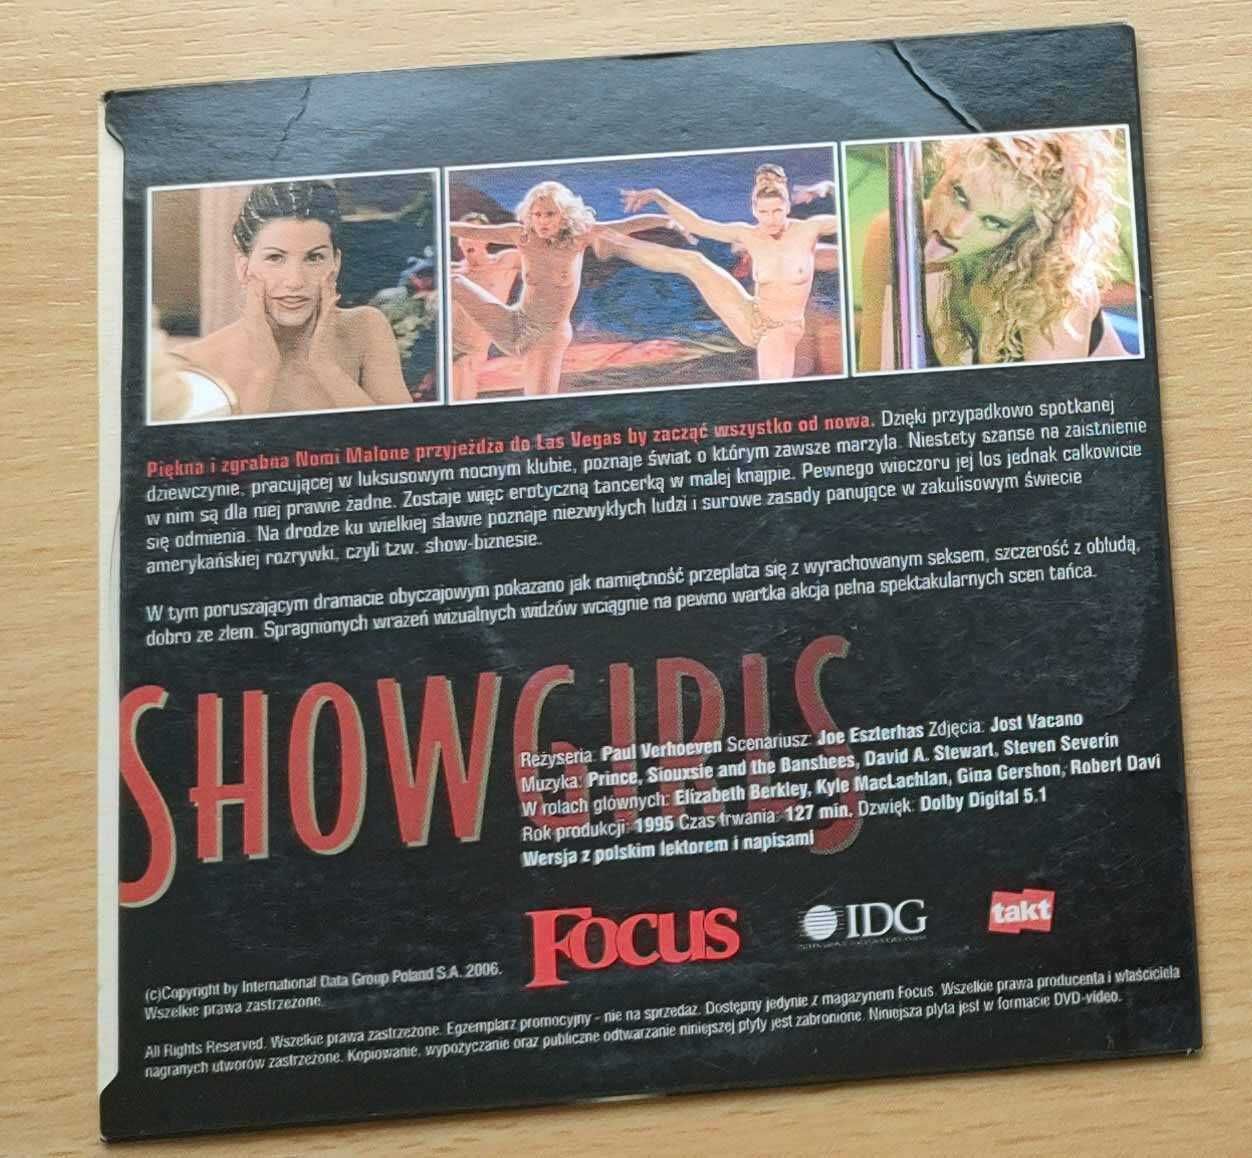 ShowGirls - film na płycie dvd - reż. Paul Verhoeven